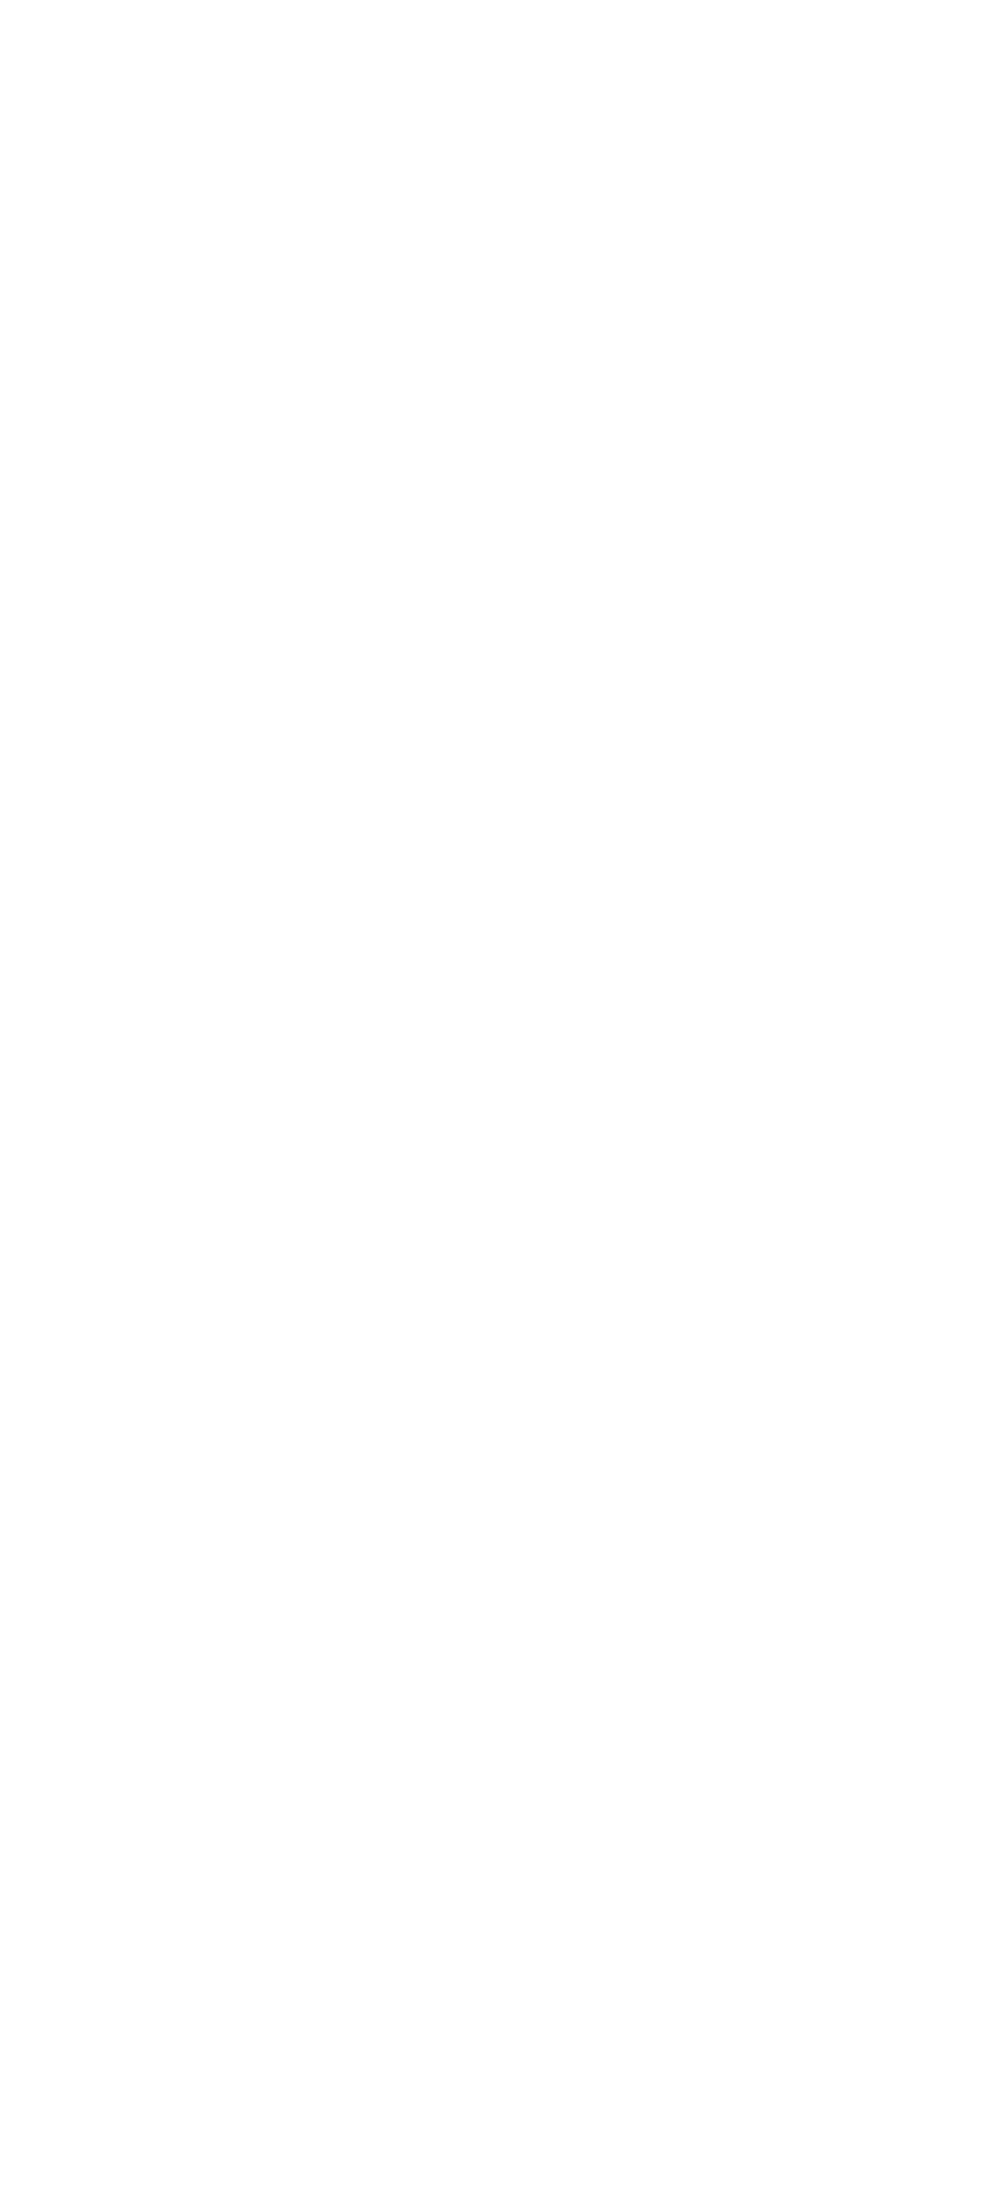 IRIS Congres Hotel Logo download